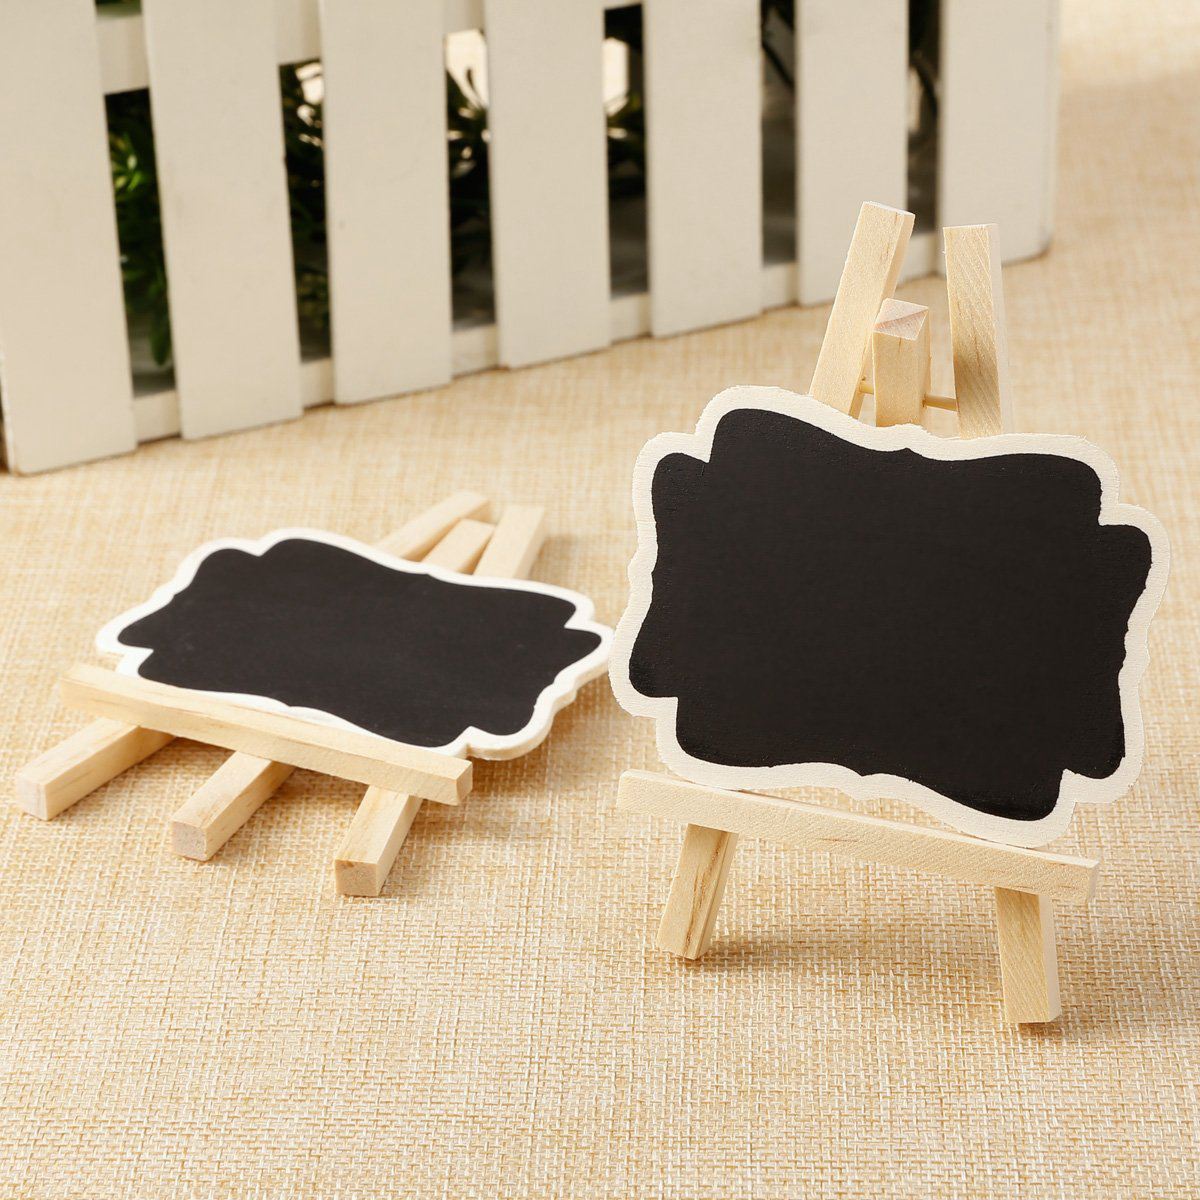 New-24 PCS Mini Wooden Blackboard Message Rectangular Slate Board Cards memo label Signs Price Digit Table